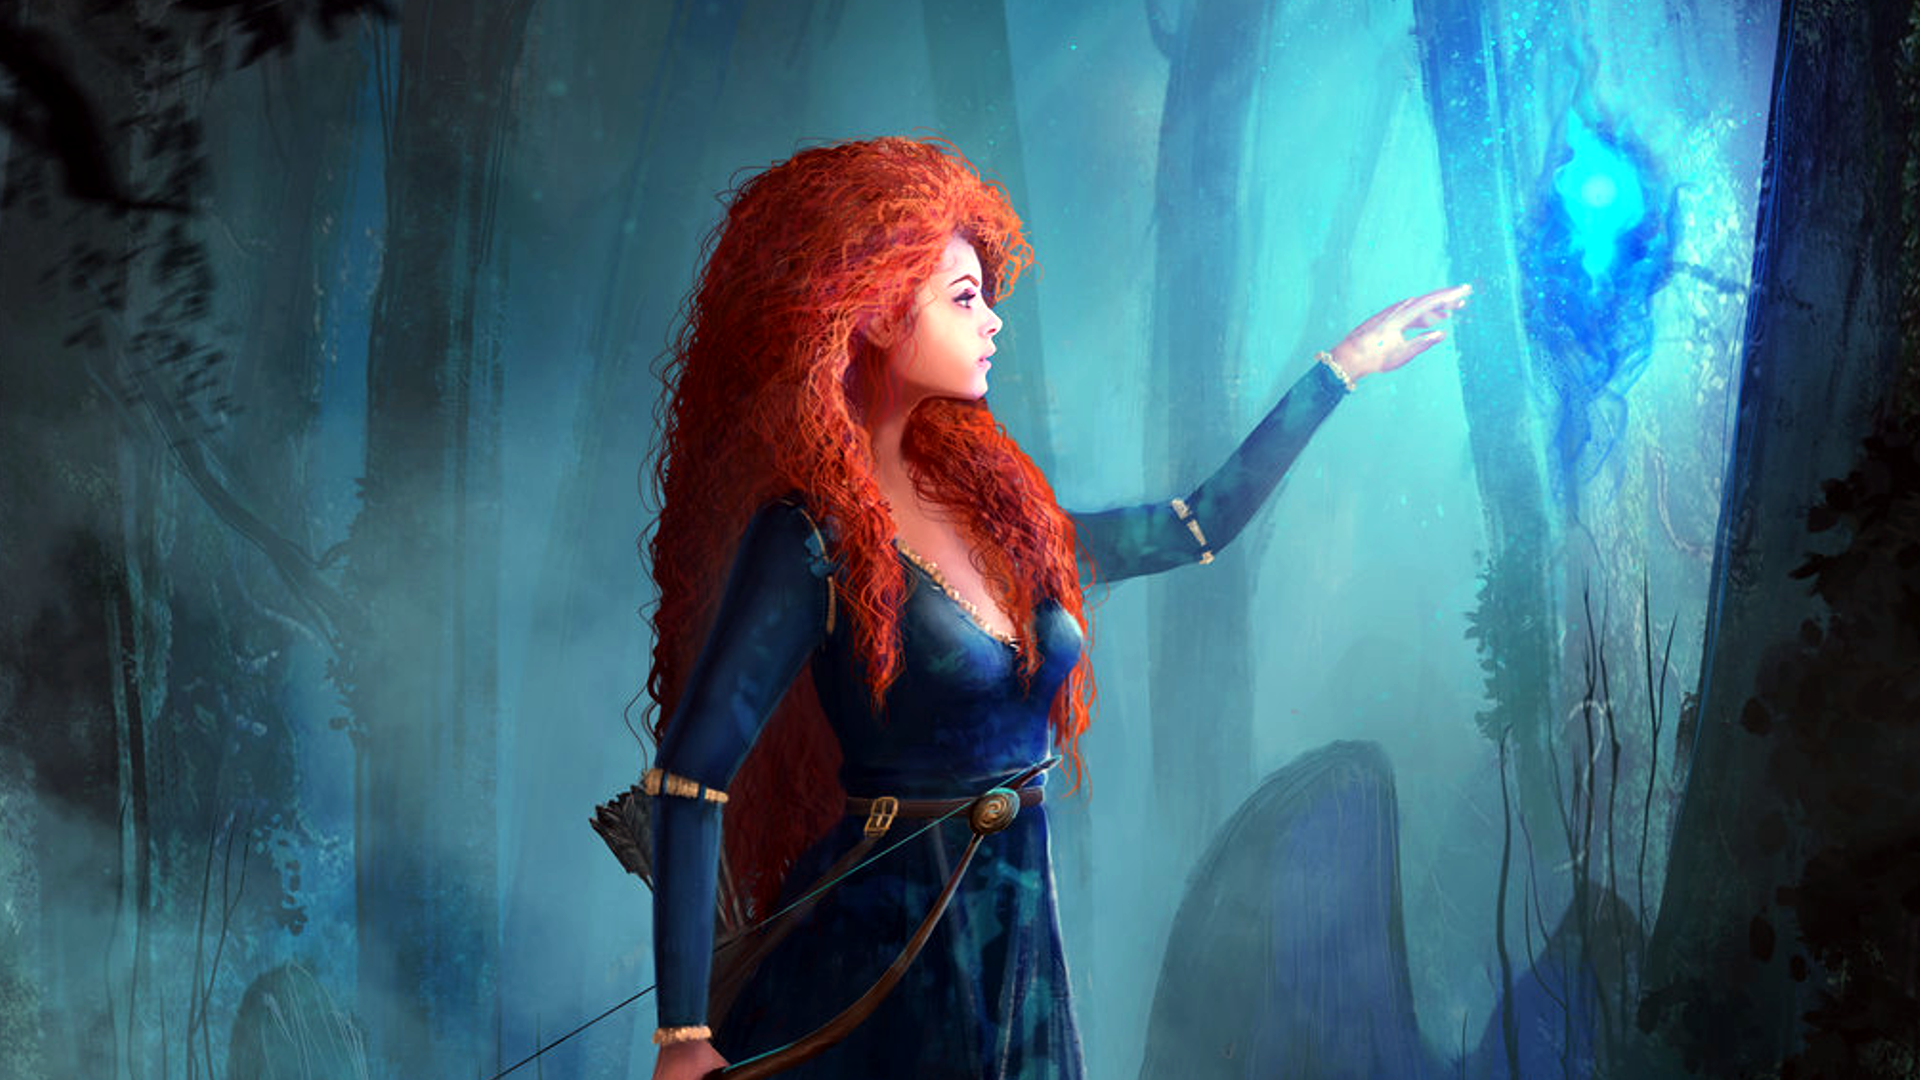 Anime 1920x1080 Brave bow Disney Princess Merida redhead cyan forest fantasy art fantasy girl long hair DeviantArt women